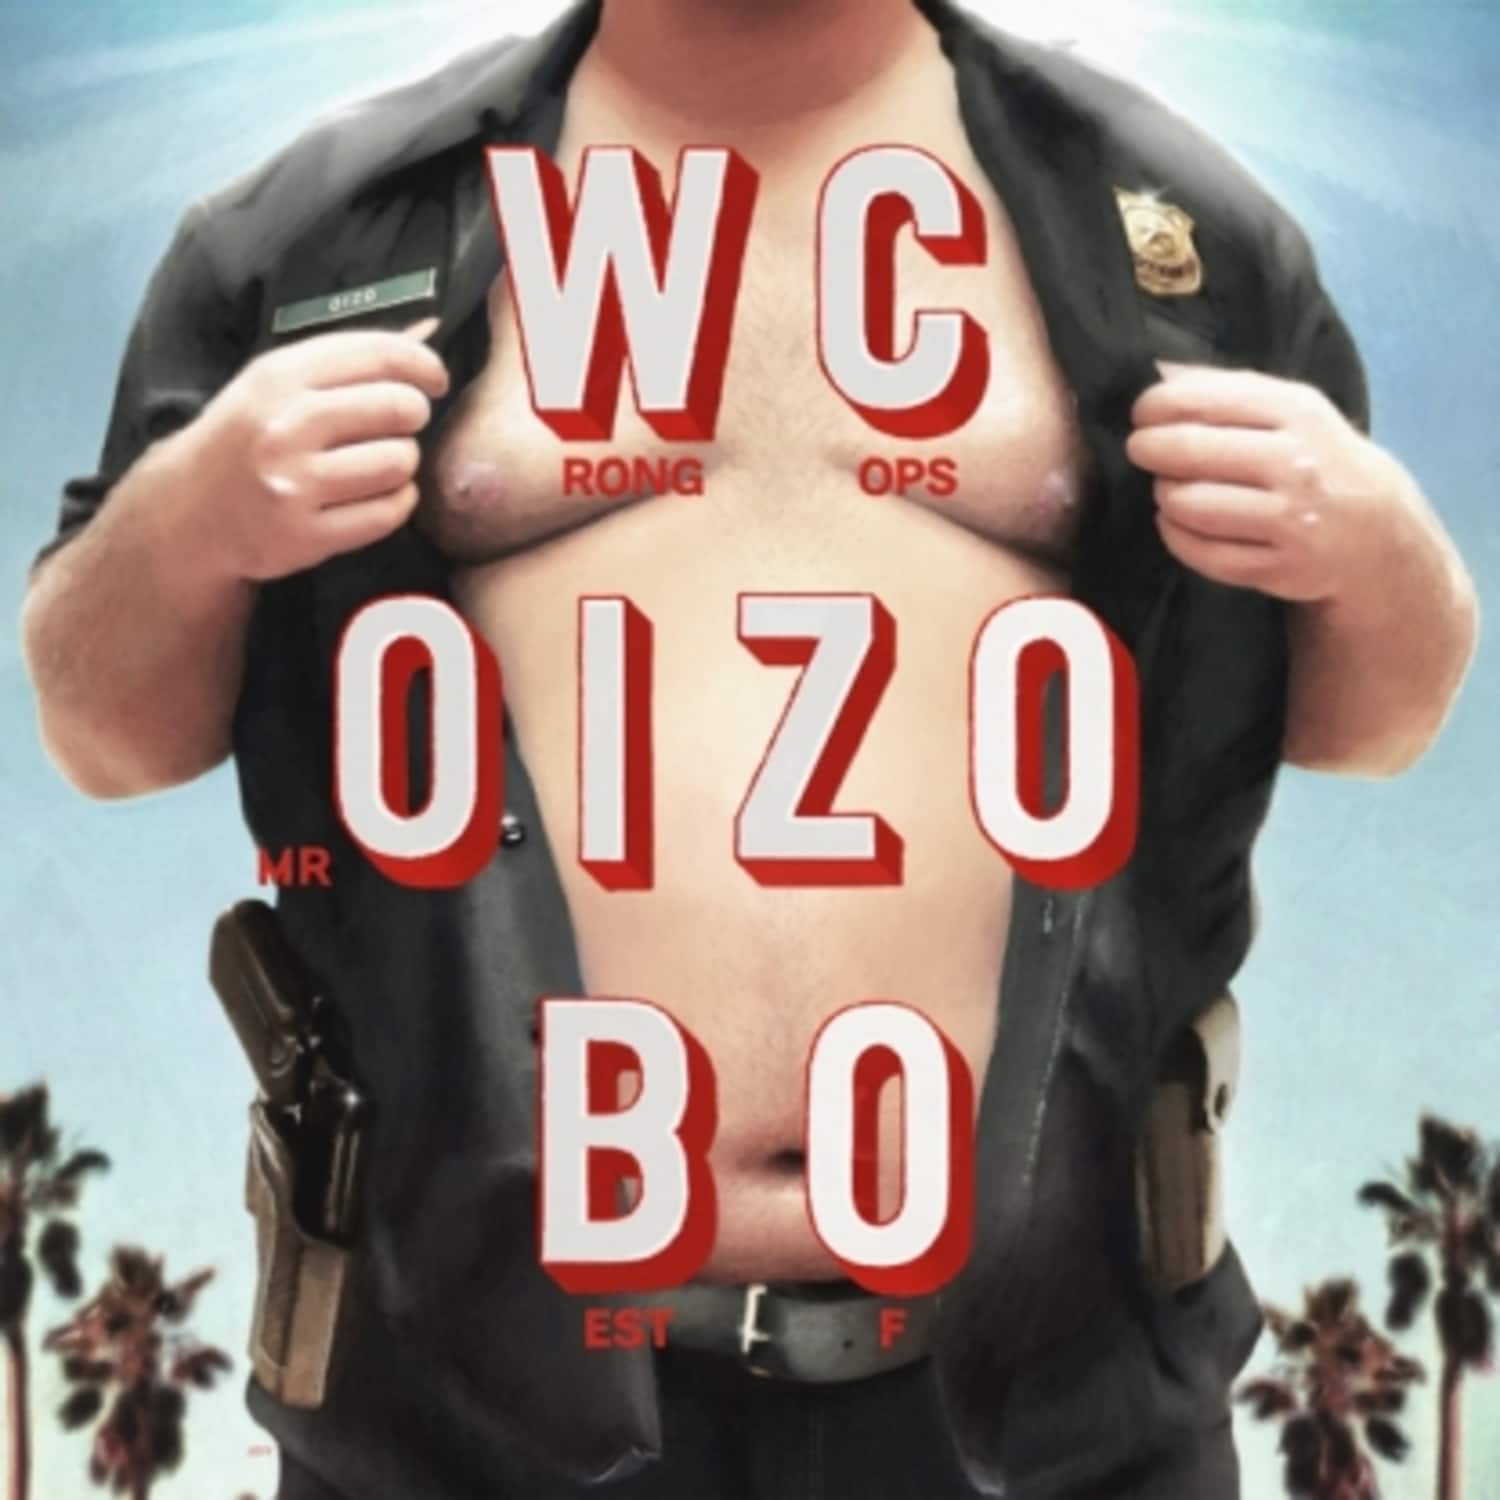 Mr. Oizo - WRONG COPS 